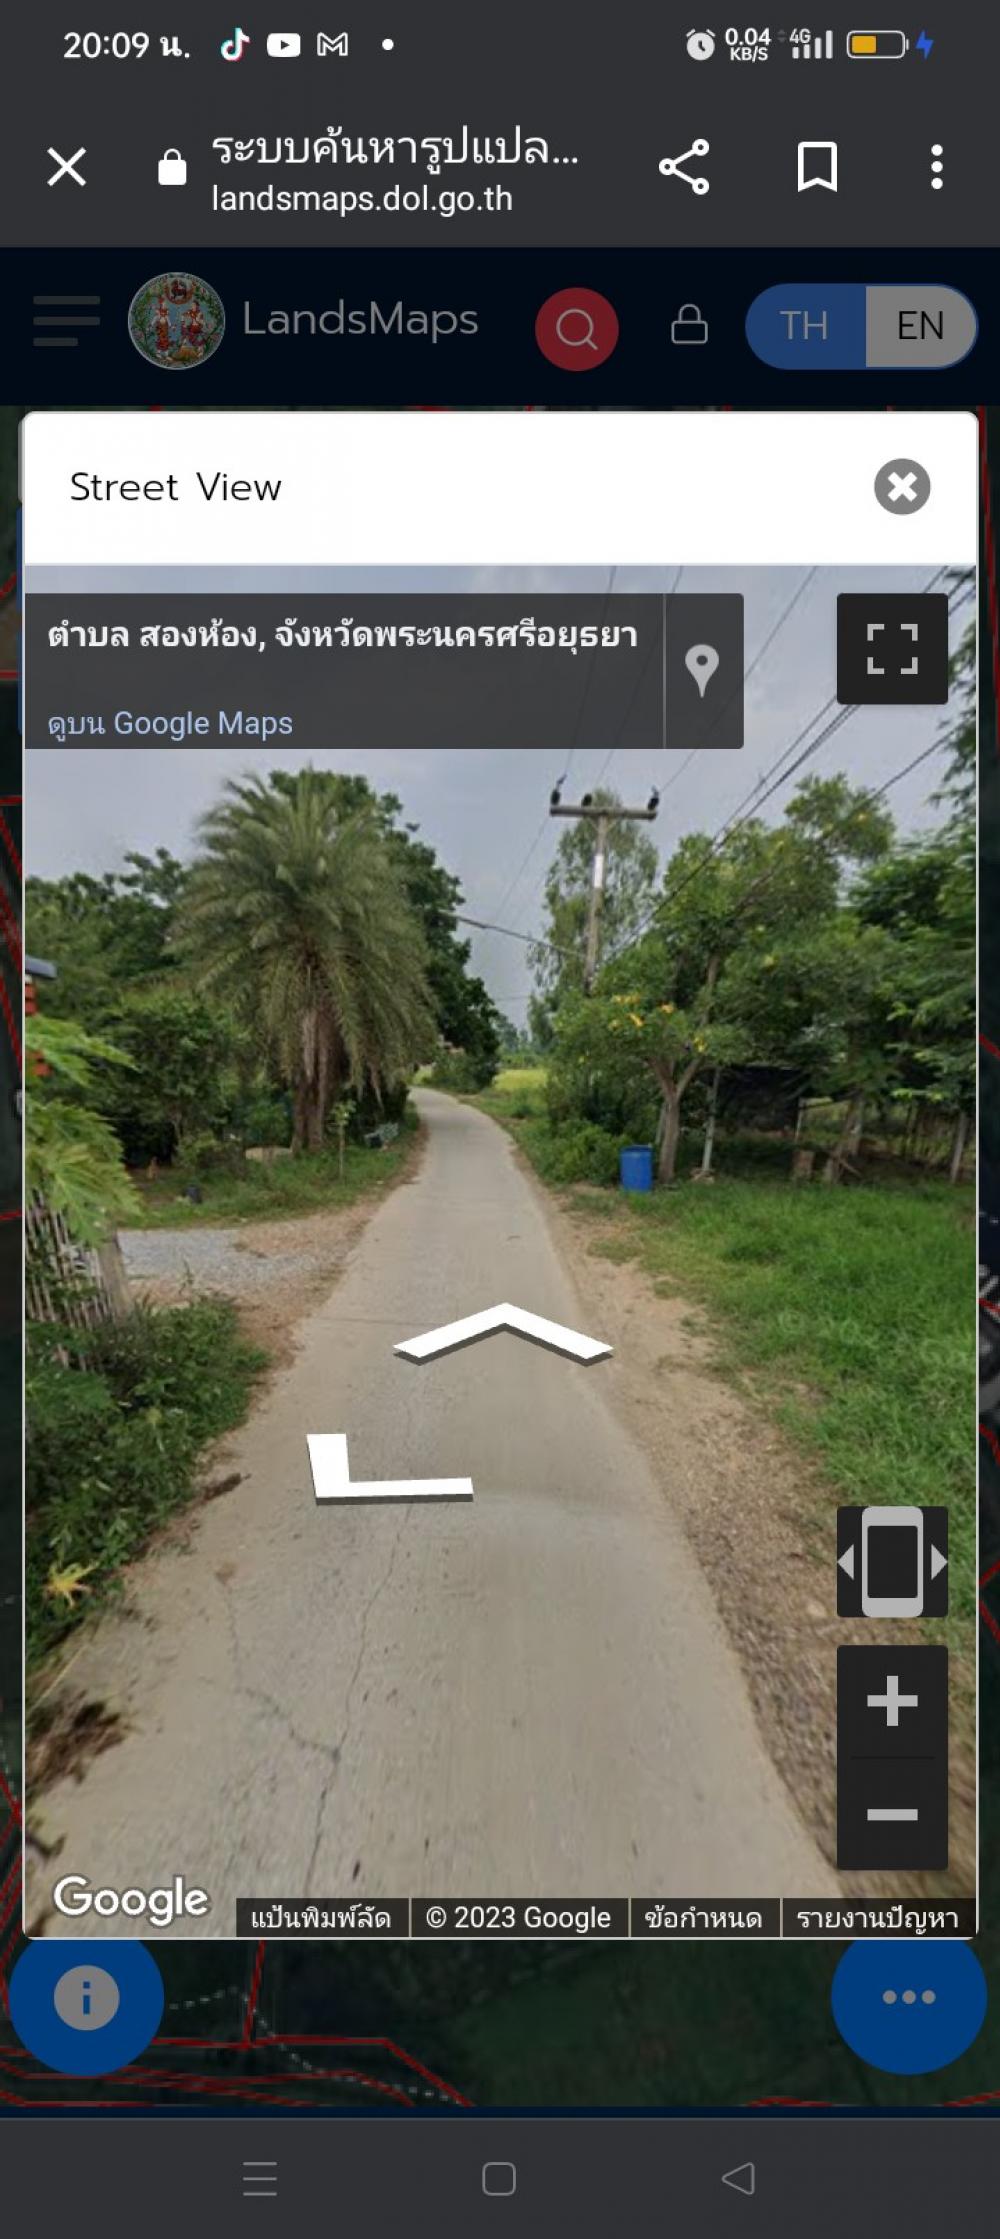 For SaleLandAyutthaya : CL 1031 Cheap land for sale next to the Lopburi River, 16 rai, Song Hong Subdistrict, Ban Phraek District, Phra Nakhon Si Ayutthaya Province.